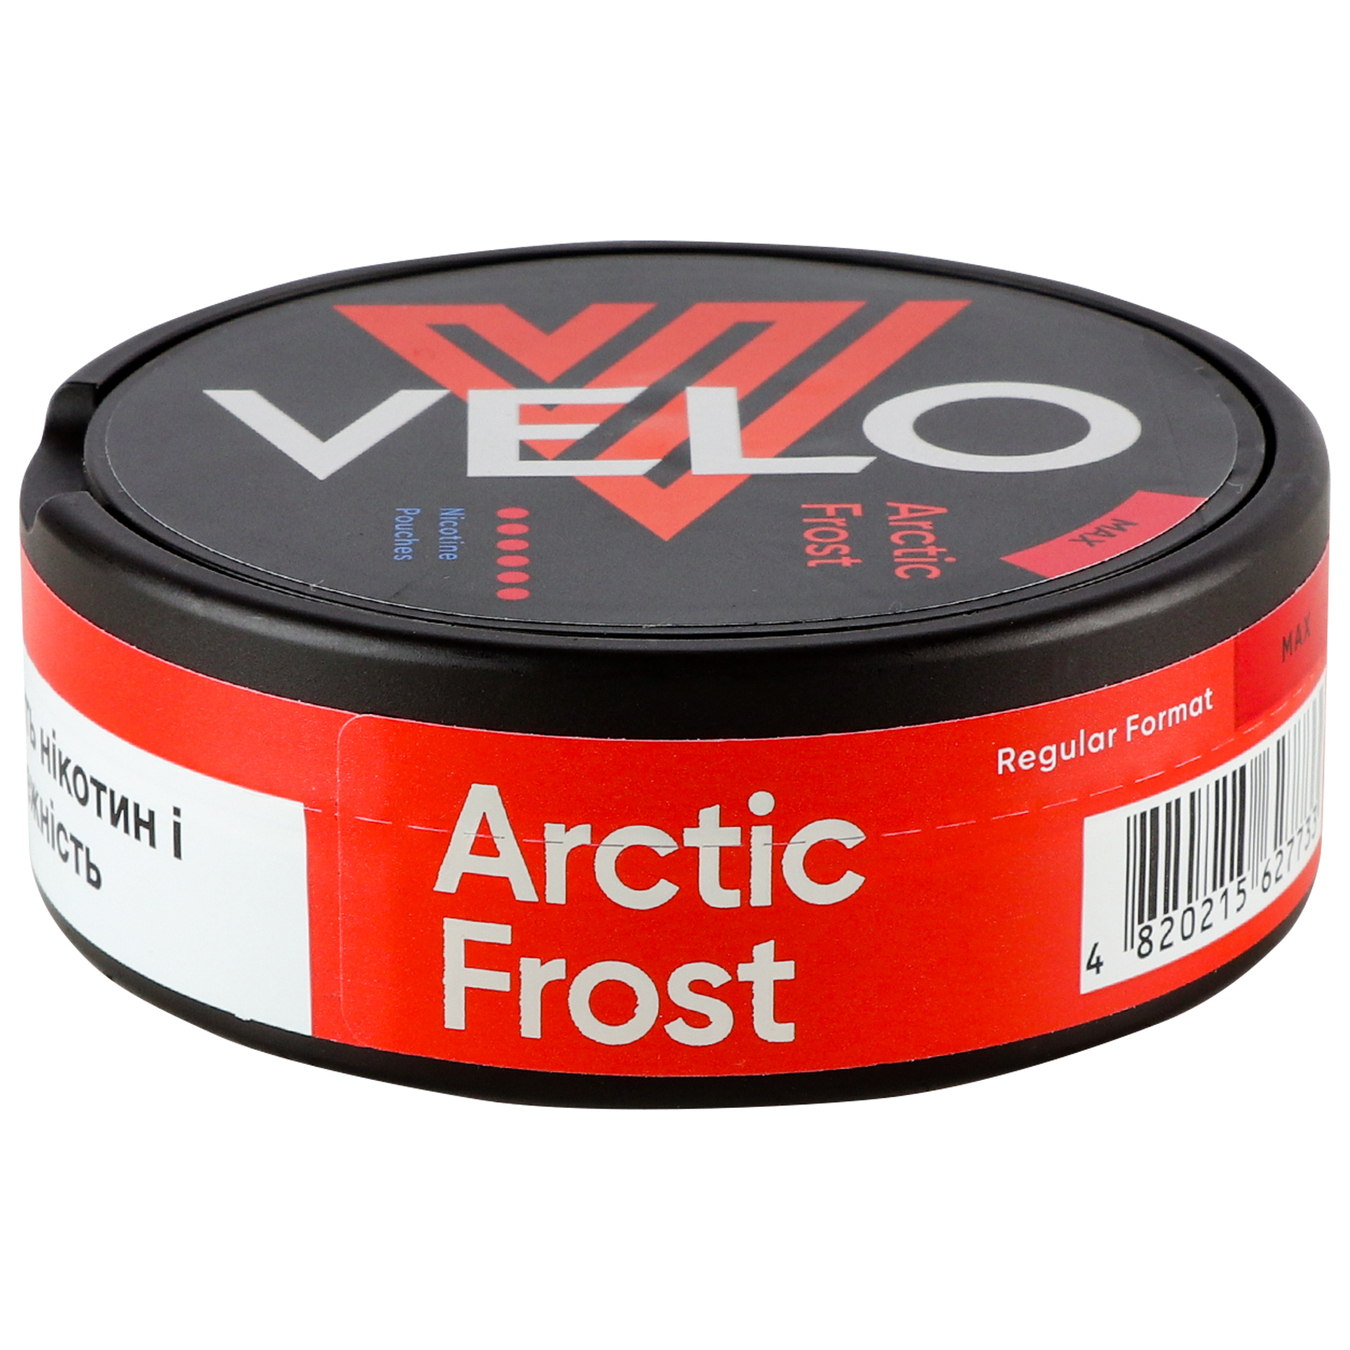 Подушечки VELO Arctic Frost Max никотиновые 18шт (цена указана без акциза) 2